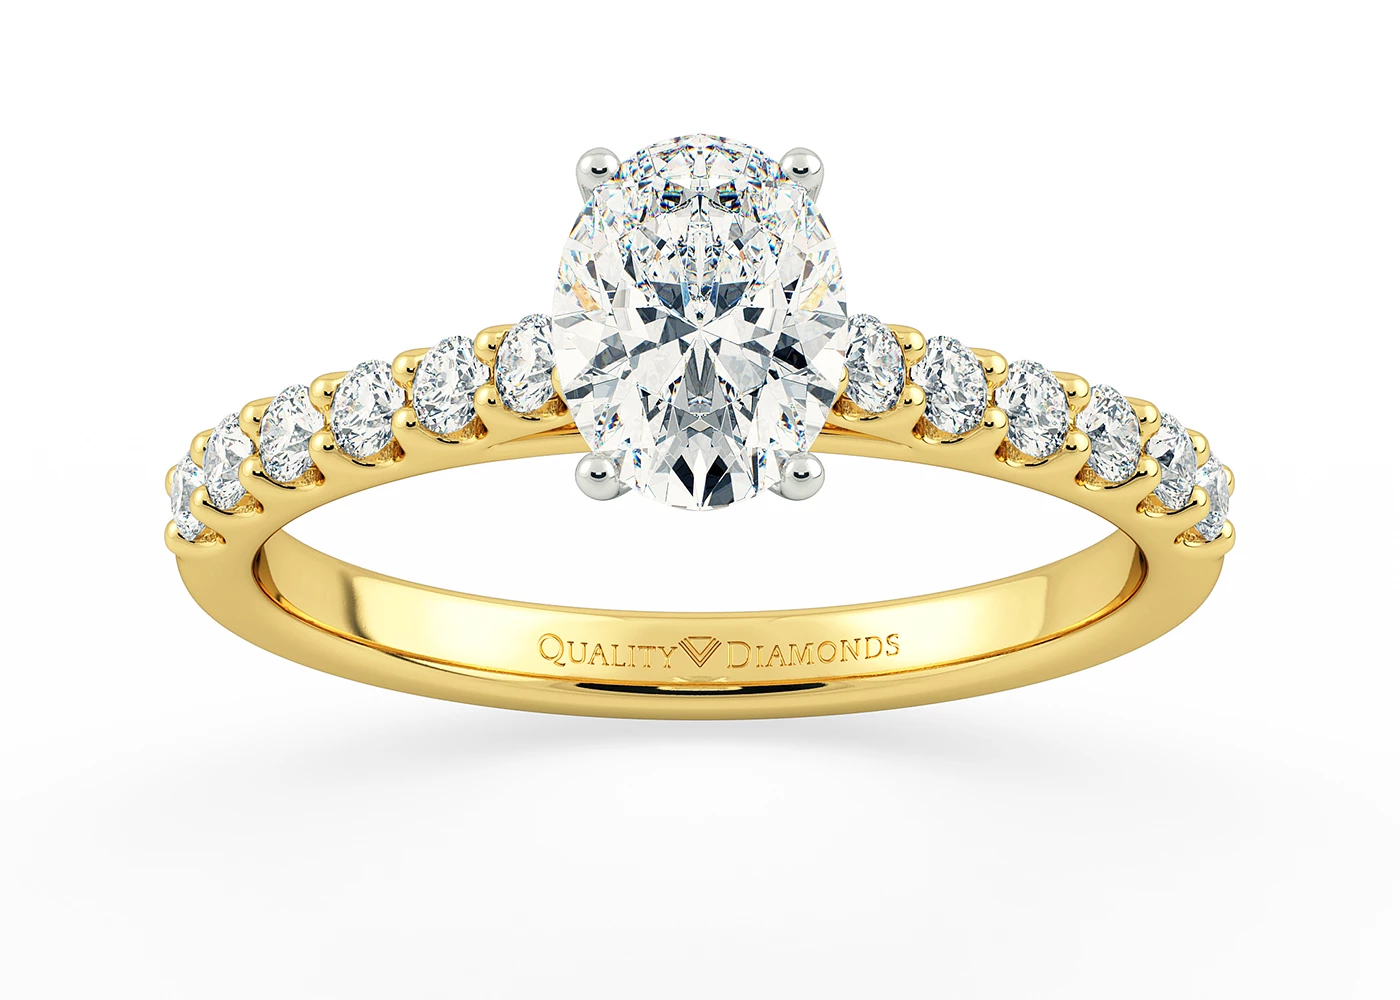 Two Carat Oval Diamond Set Diamond Engagement Ring in 18K Yellow Gold